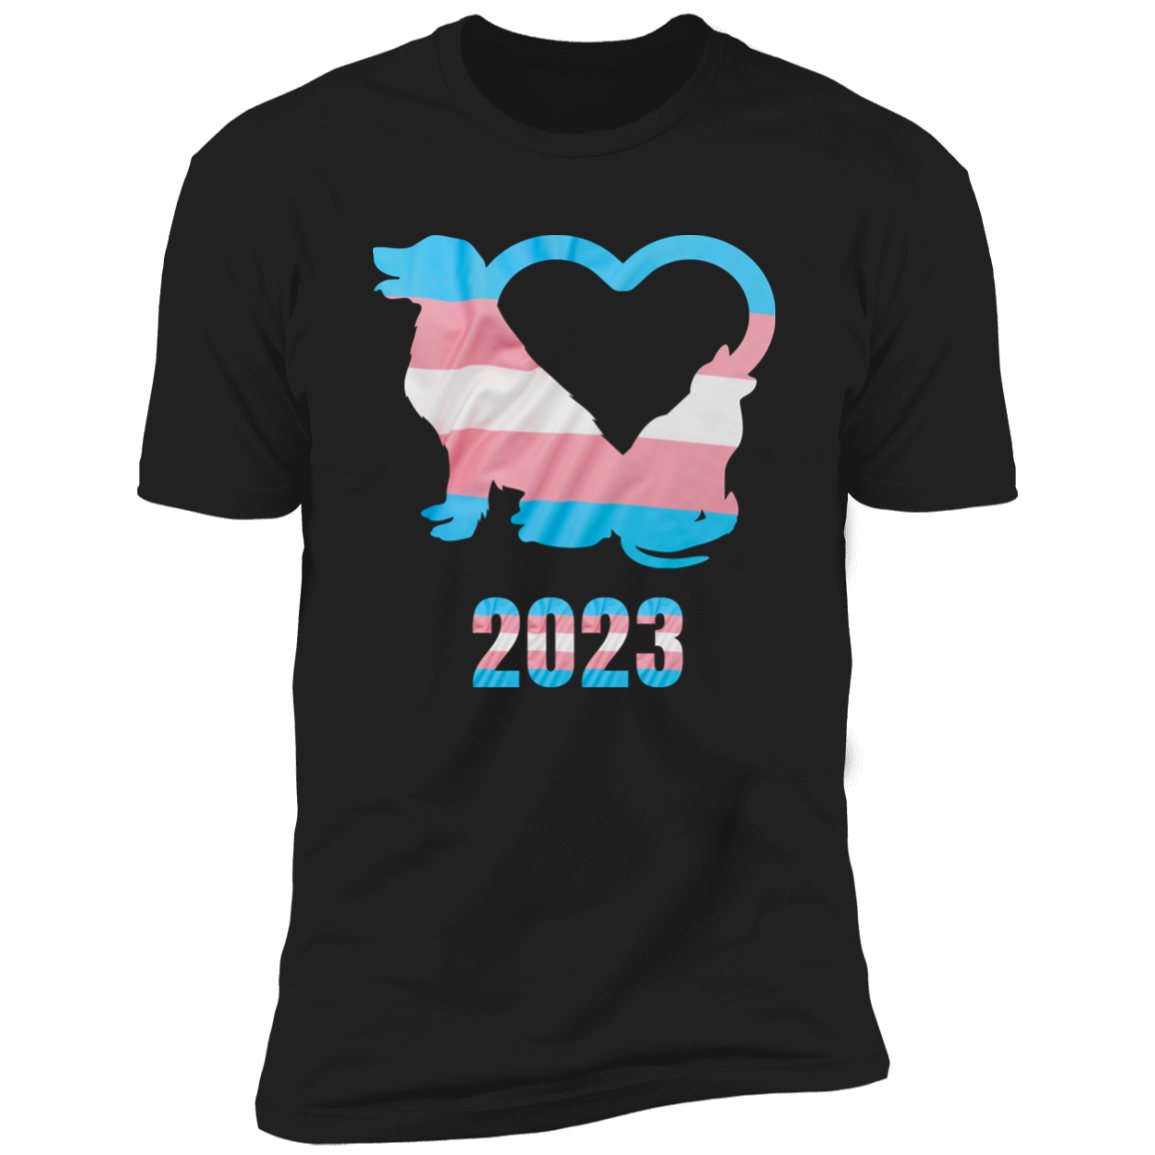 Trans Pride Dog & Cat Heart Pride T-shirt, Trans Pride Dog & Cat Shirt for humans, in black